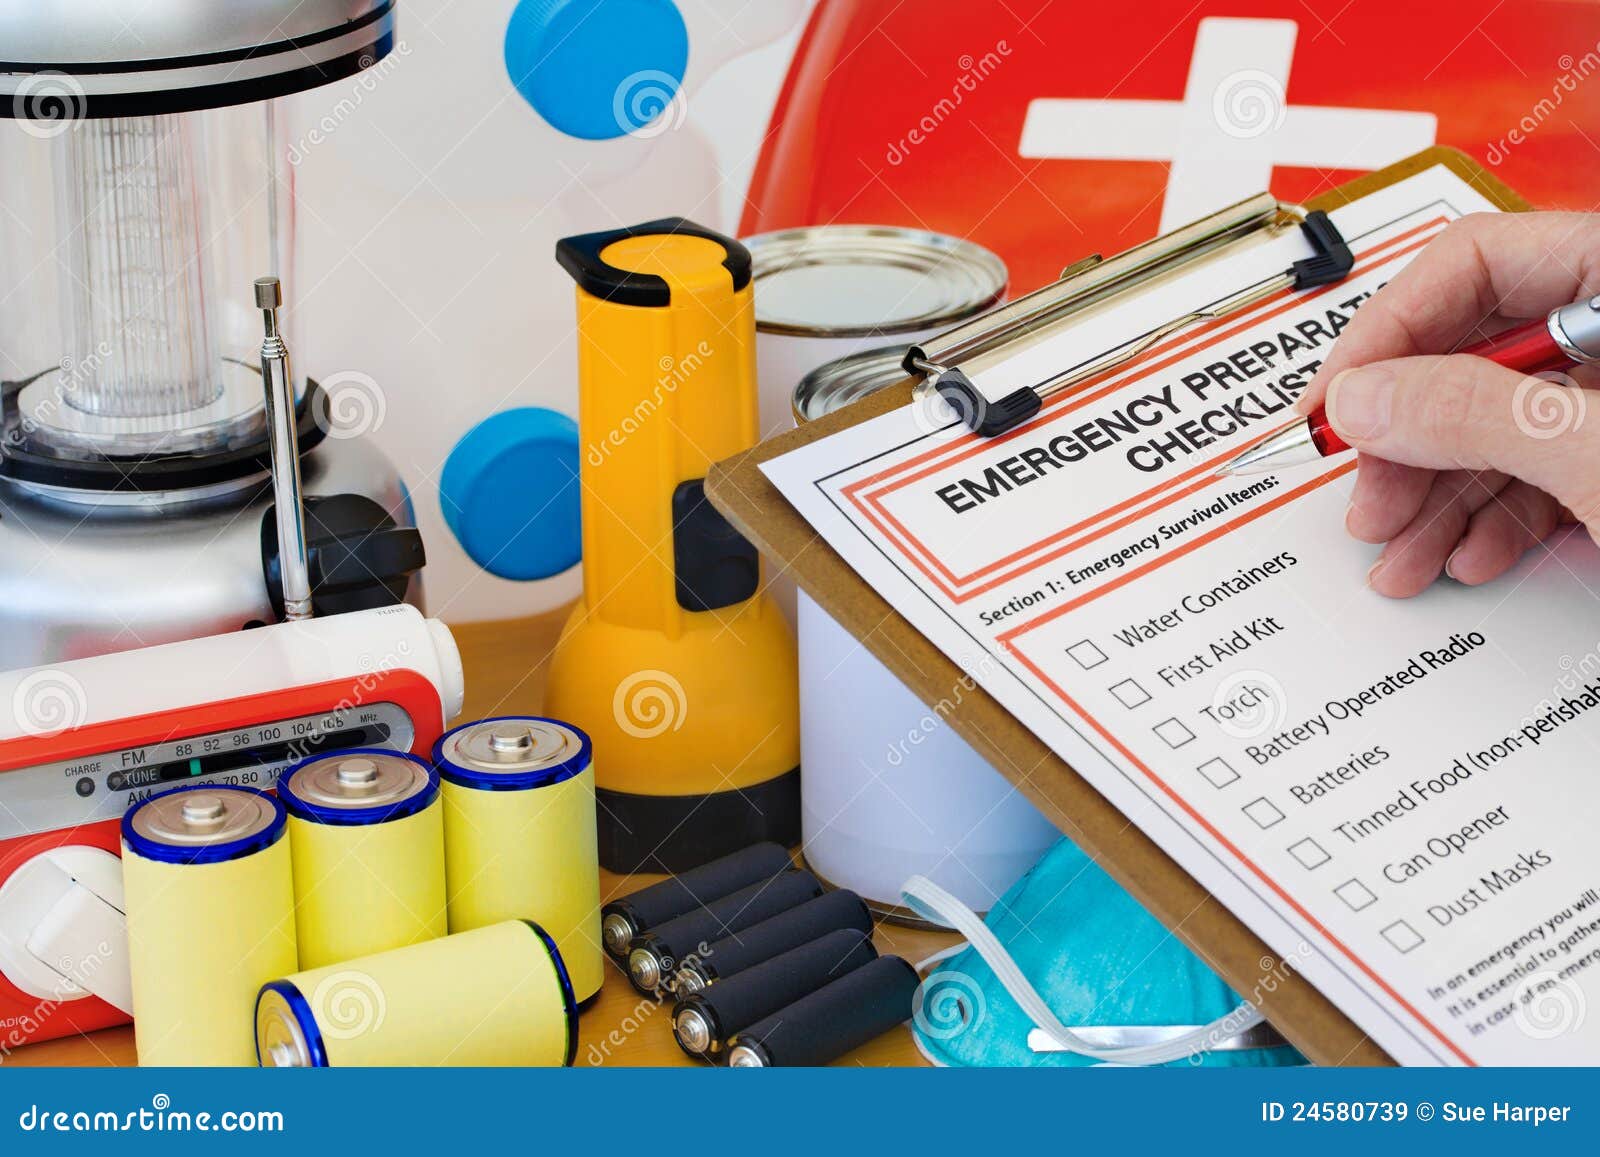 hand writing emergency preparation equipment list